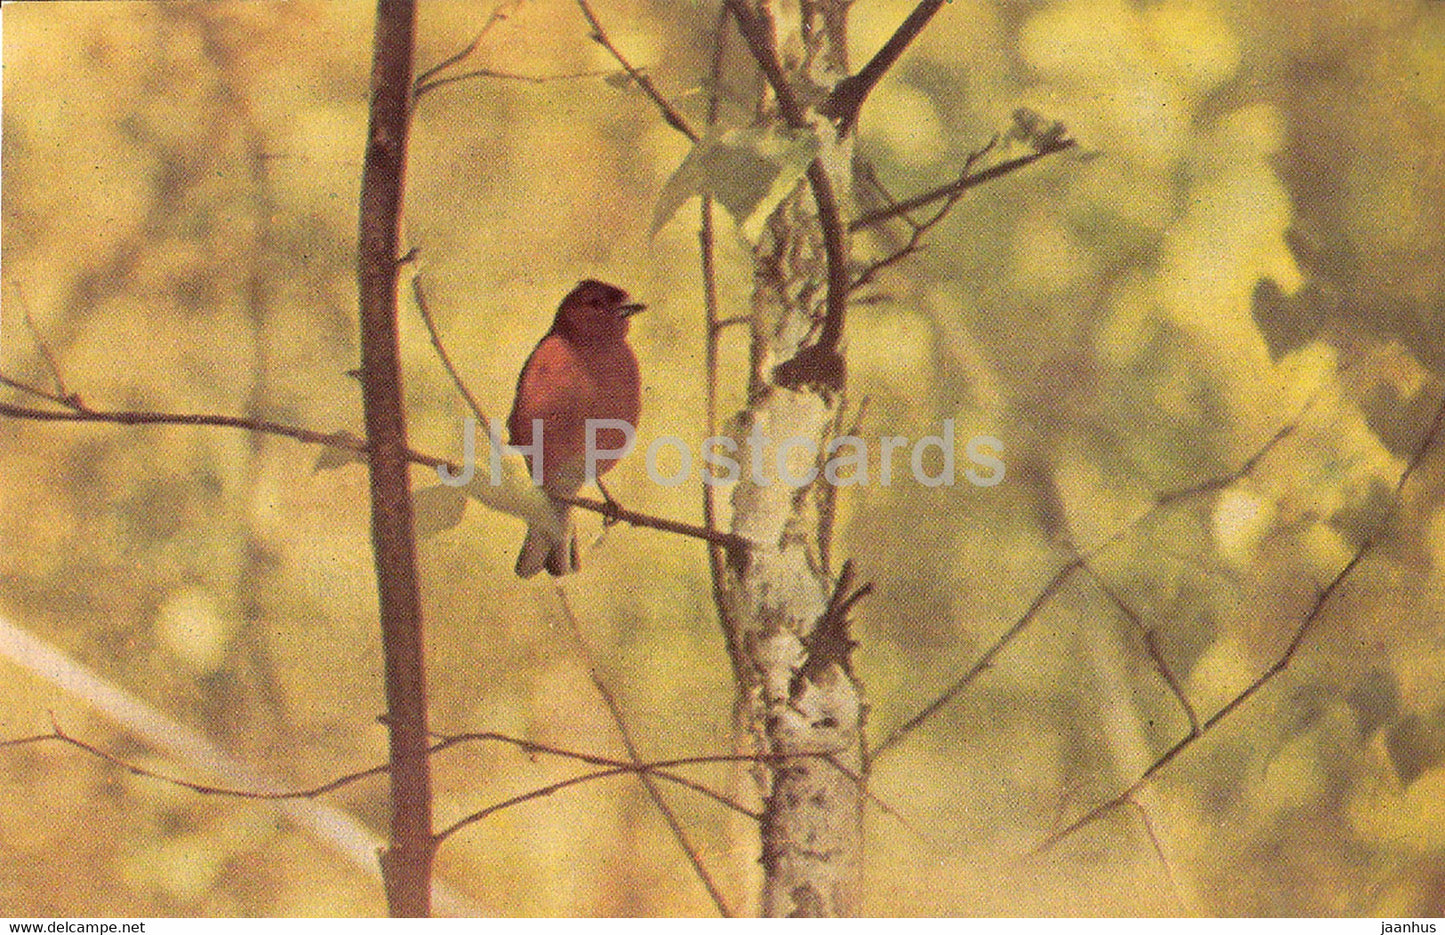 Common chaffinch - Fringilla coelebs - birds - 1968 - Russia USSR - unused - JH Postcards